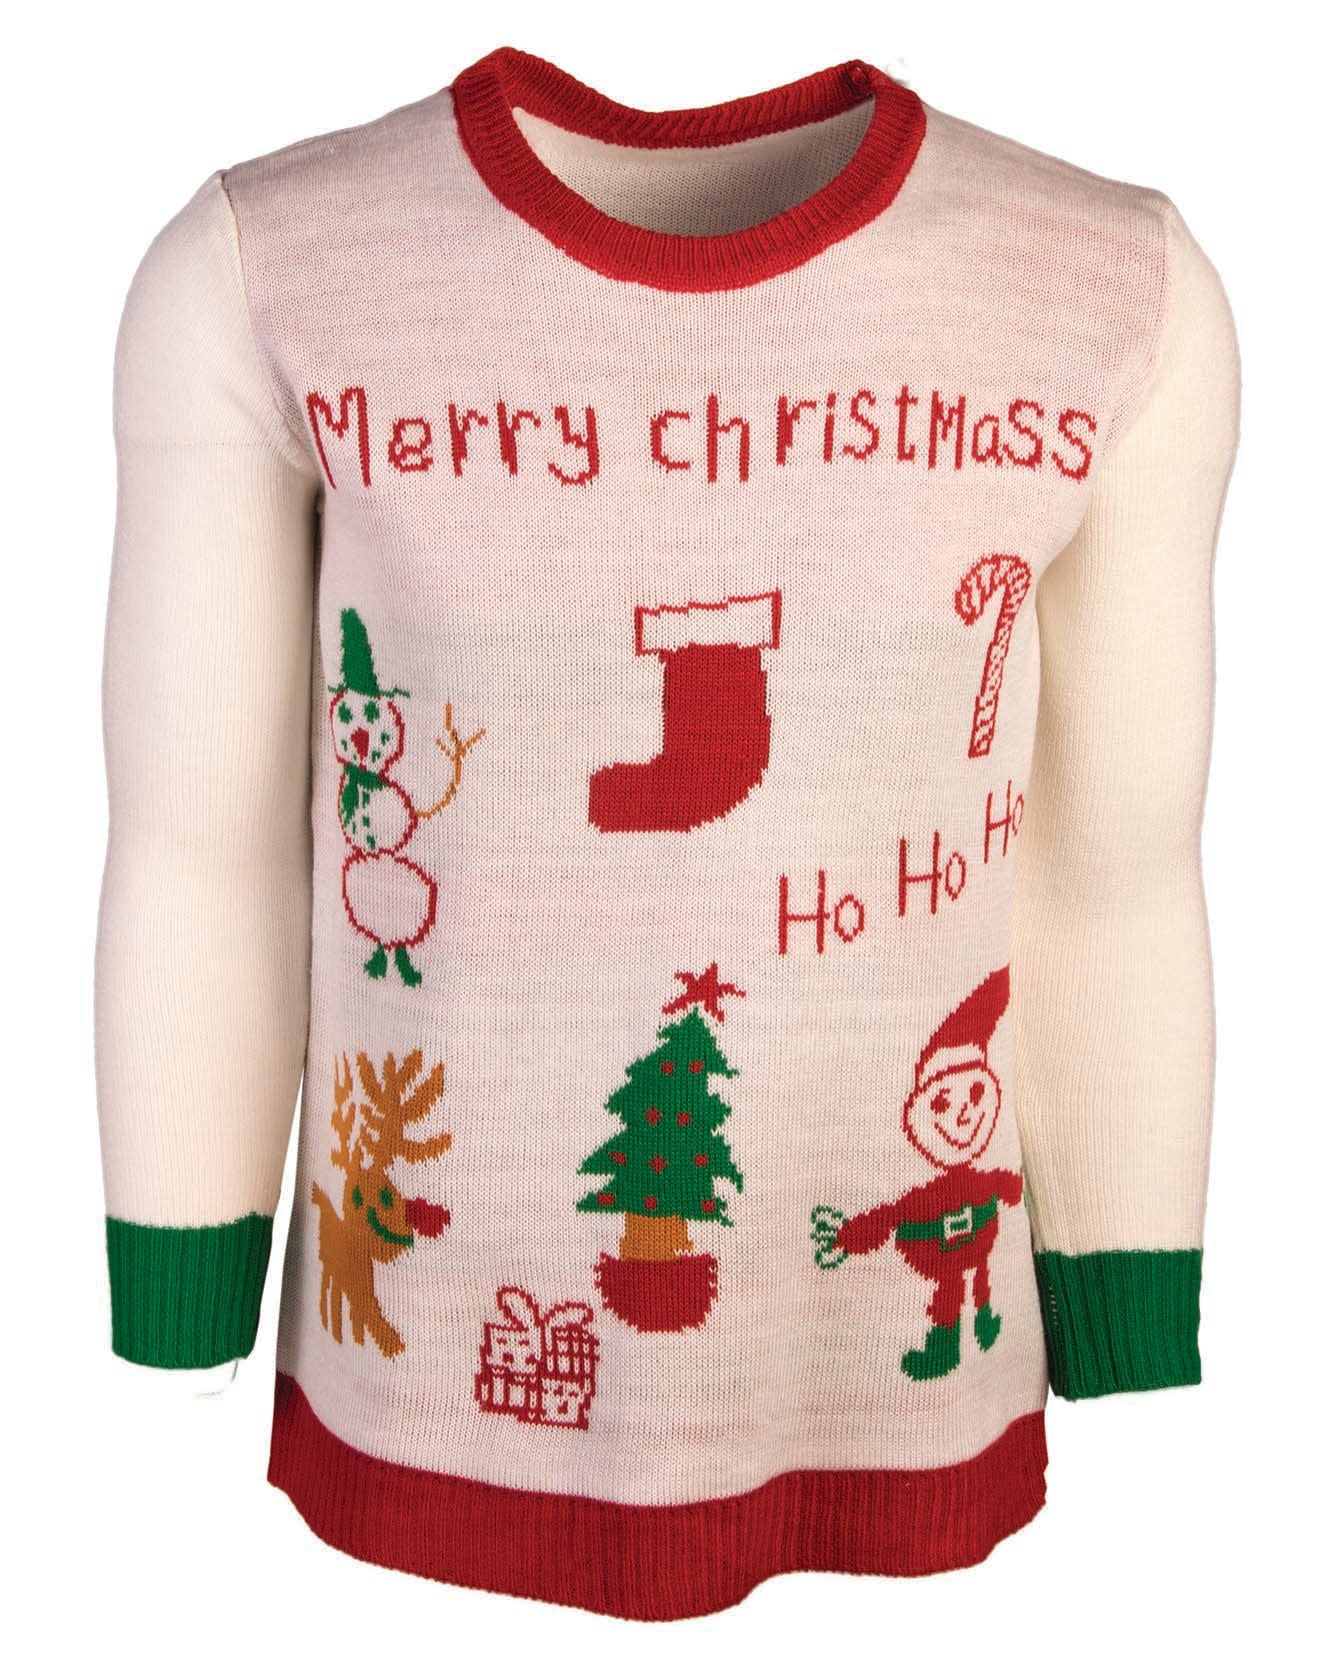 Sweater: Merry Christmas